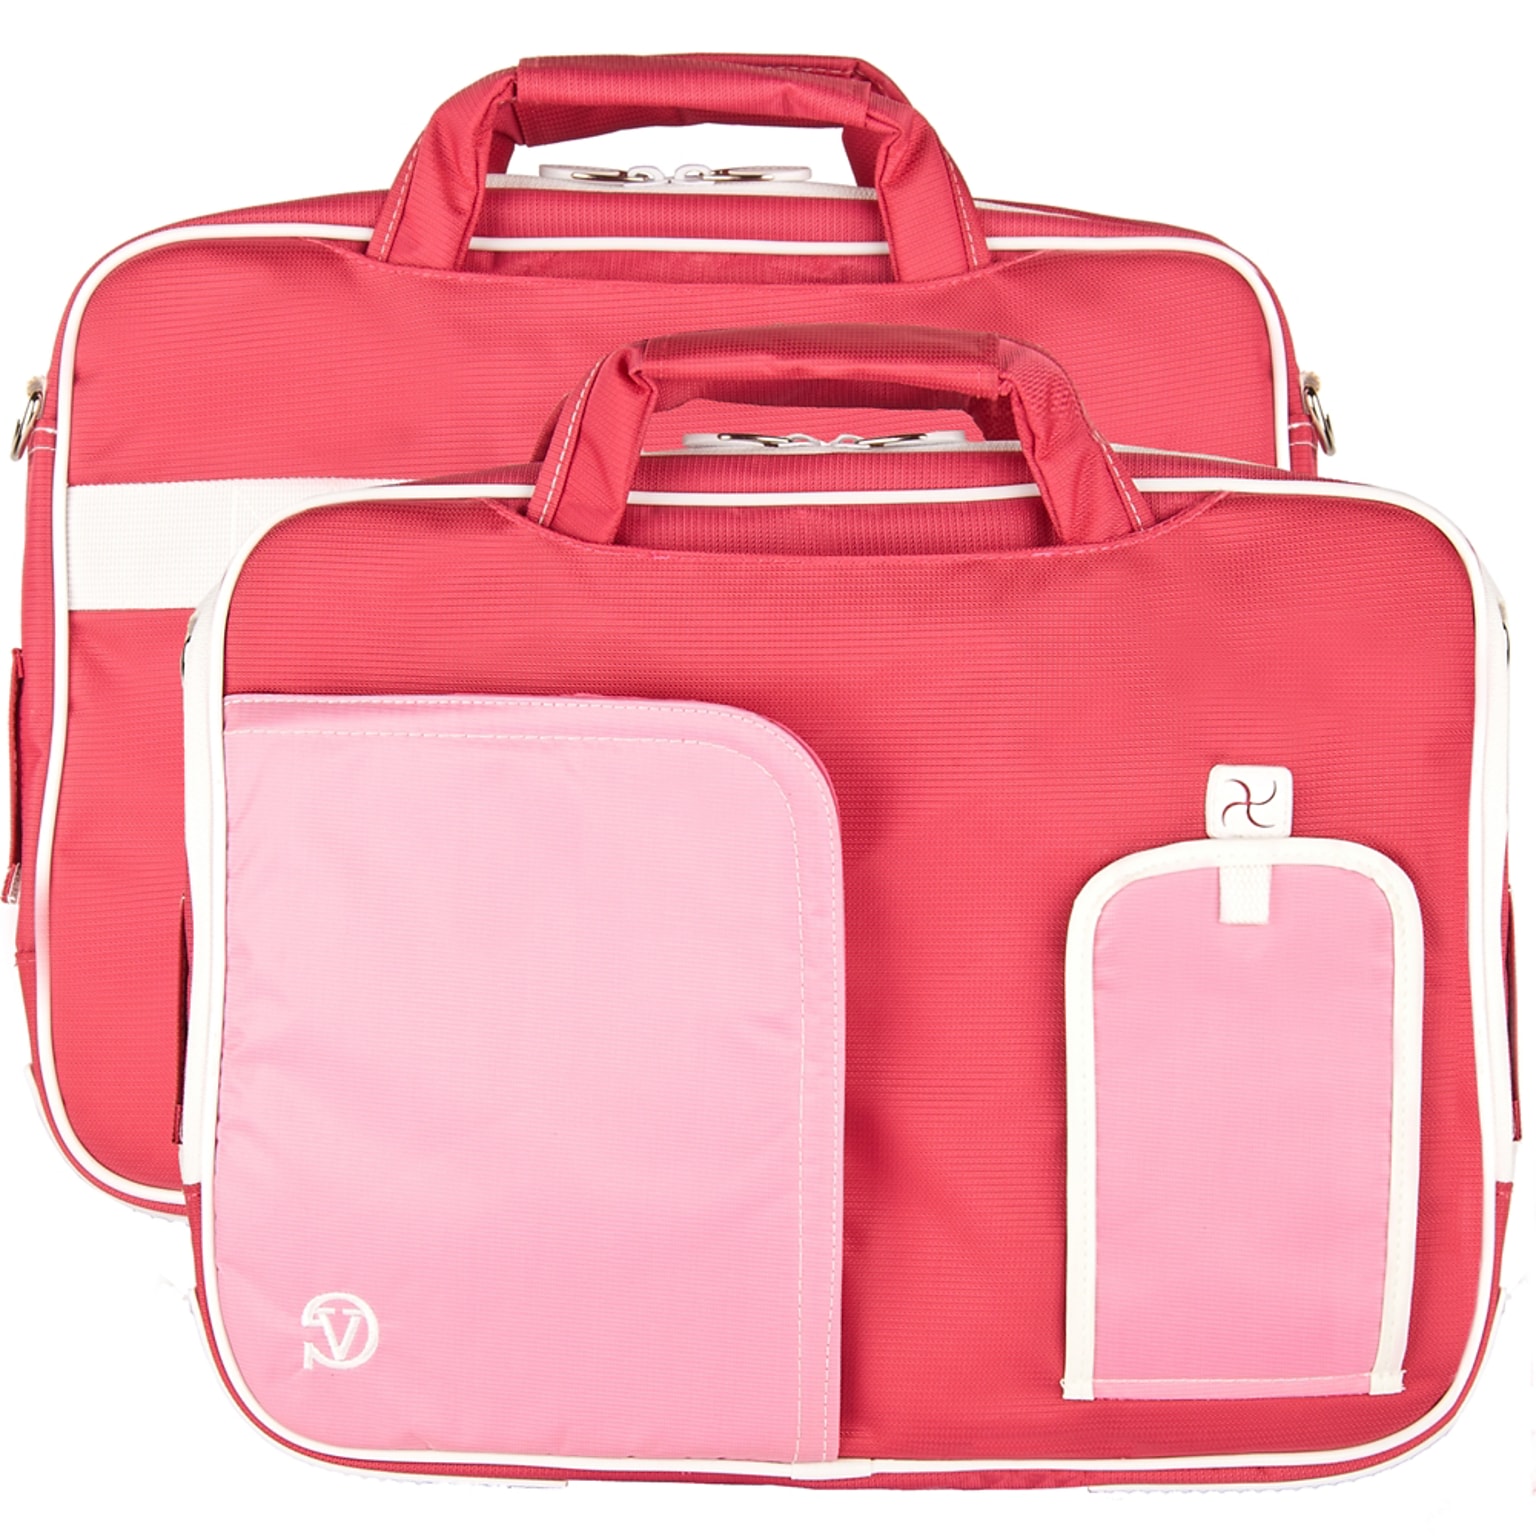 Vangoddy Pindar Laptop Sleeve Messenger Shoulder Bag Fits up to 13 Laptops - Medium (Pink and White)